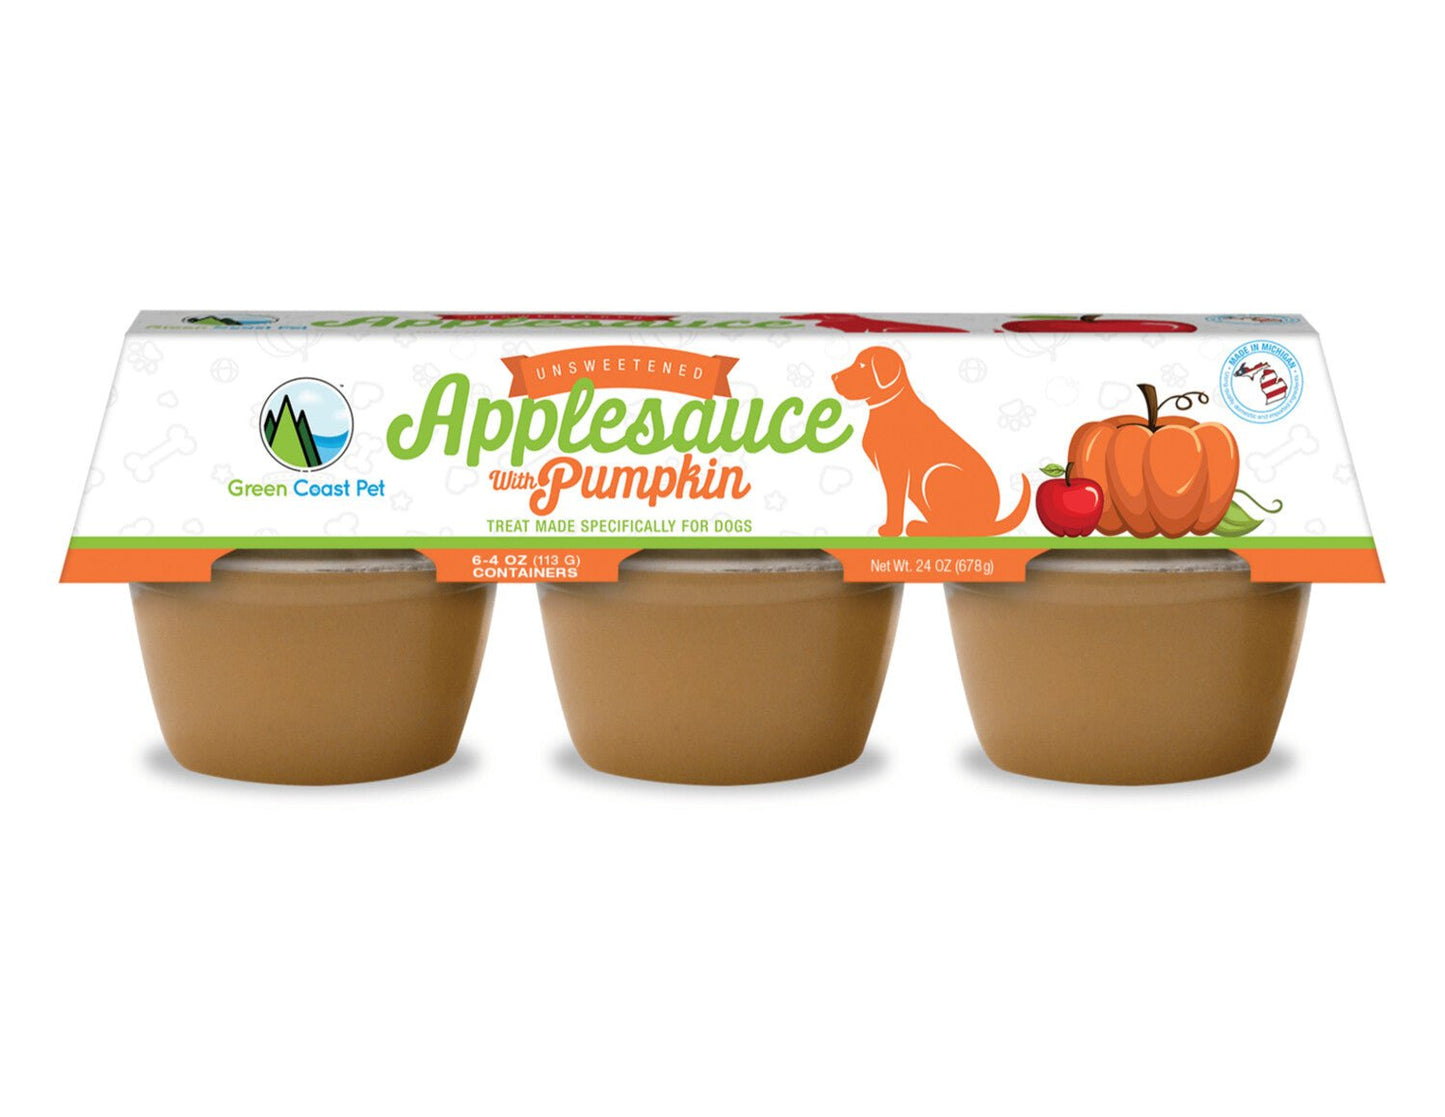 Green Coast Pet Applesauces Applesauce with Pumpkin